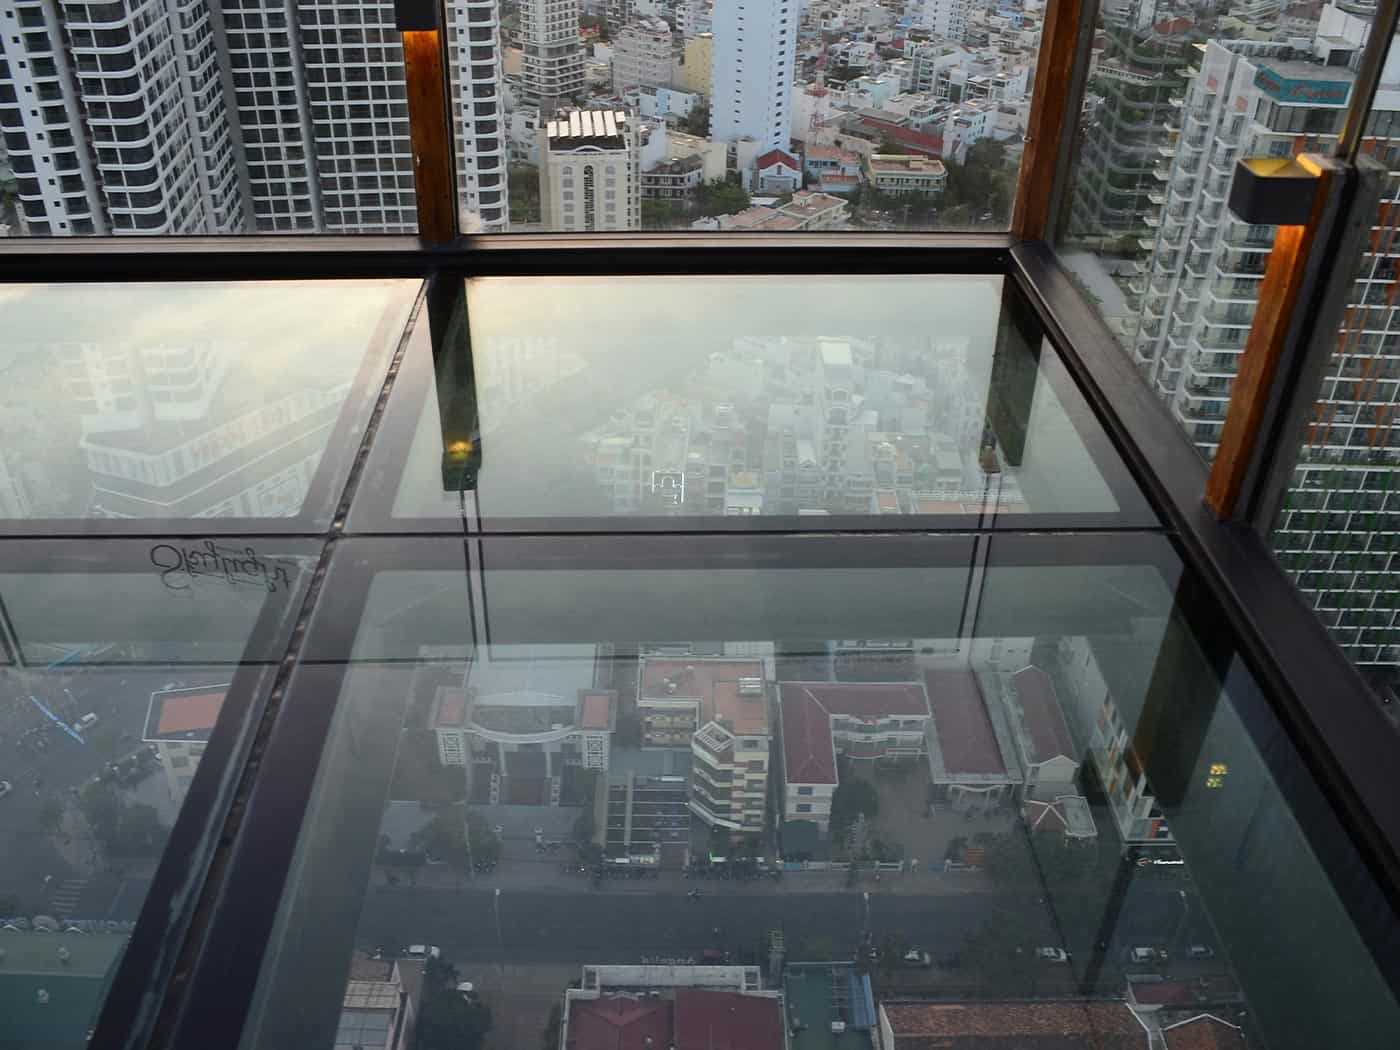 laminated glass floor